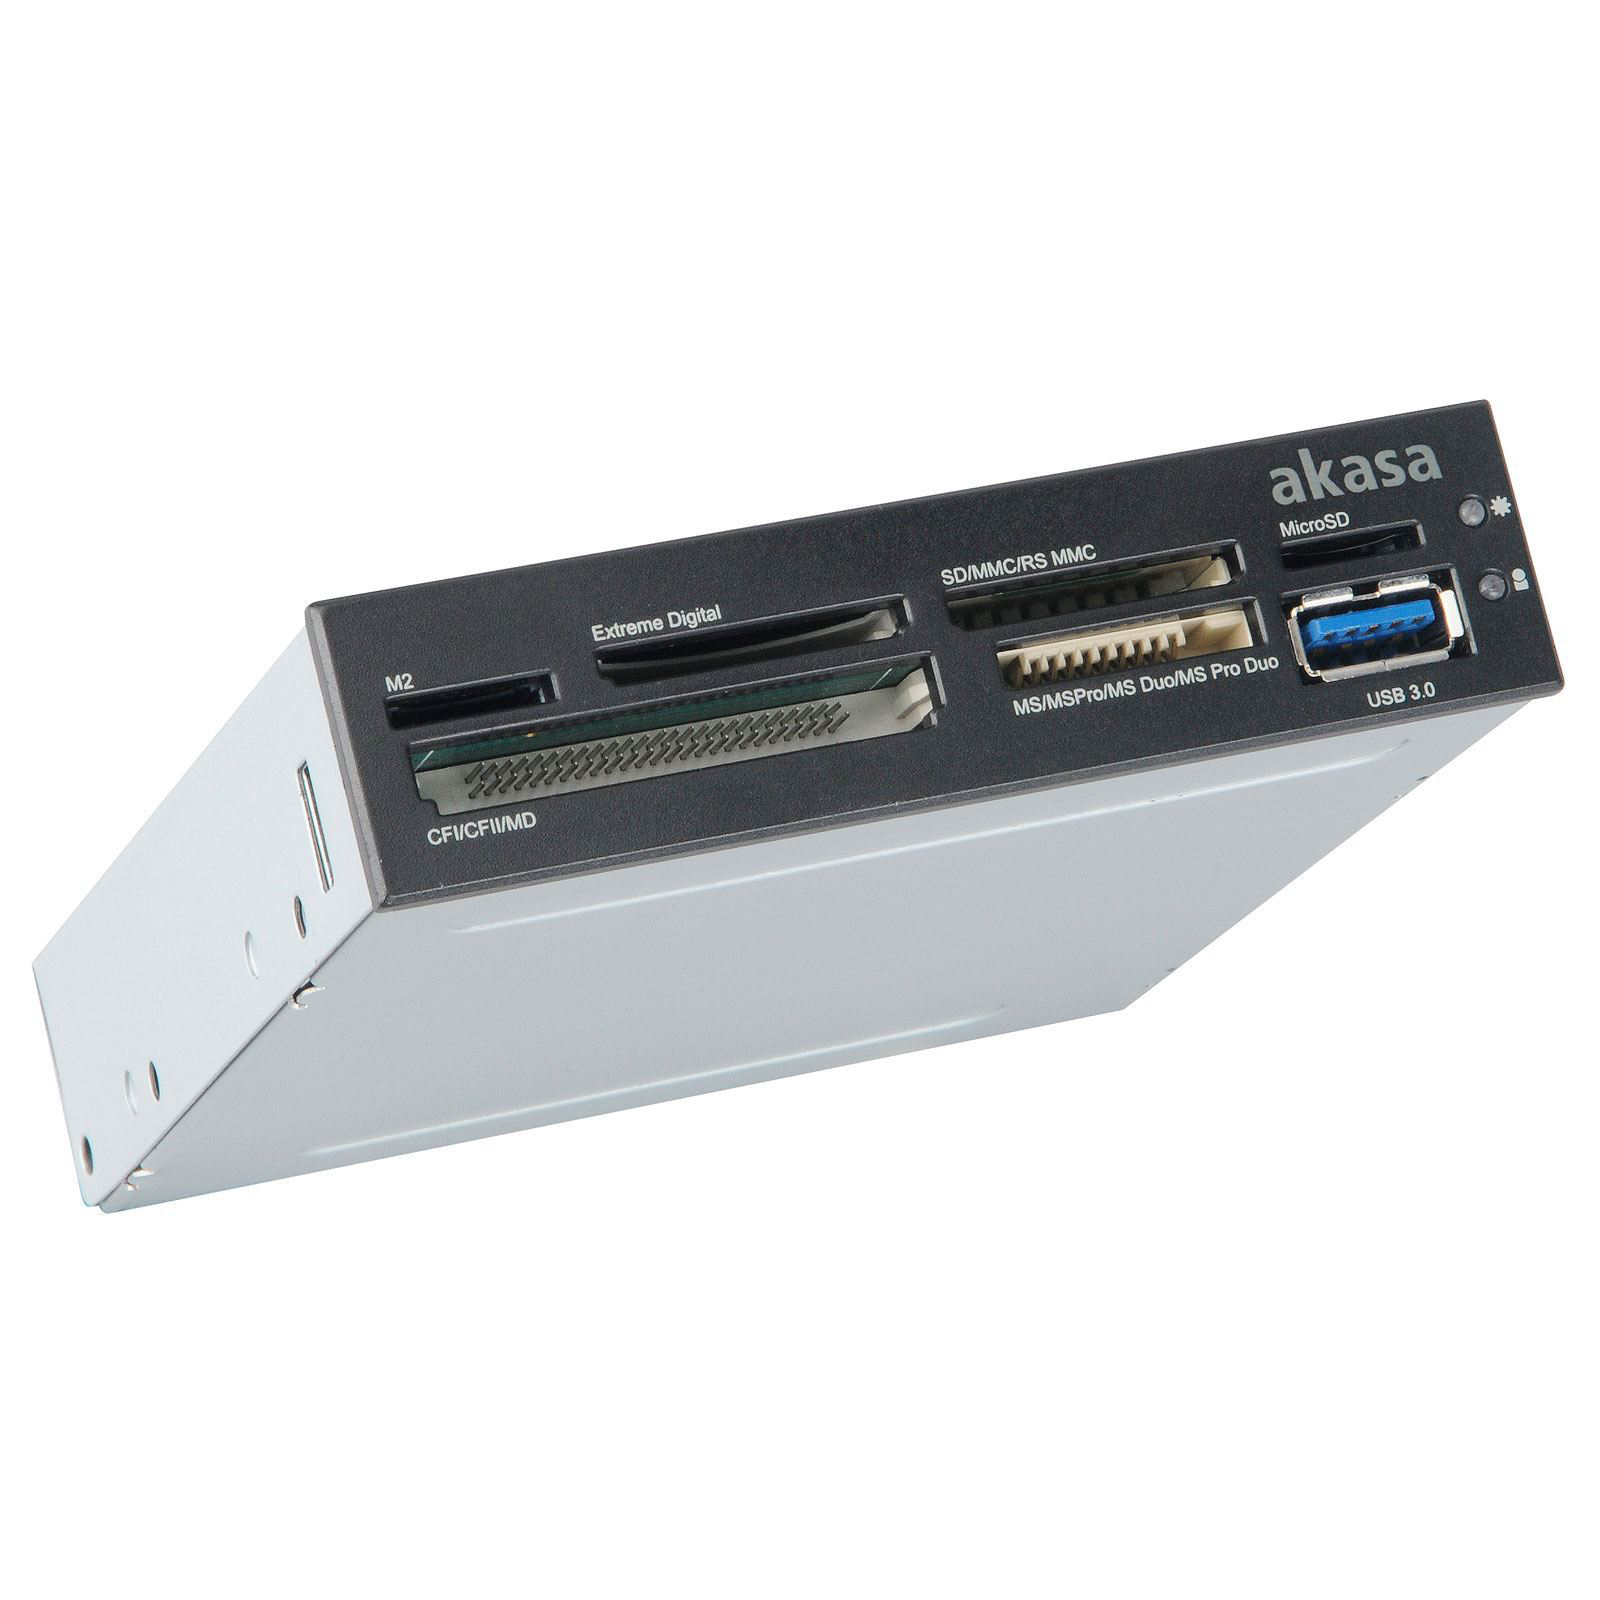 Oem 3,5 inch cardreader, 5-slots multi-card reader zwart met USB 3.0 mainboard aansluiting en USB3.0 front aansluiting